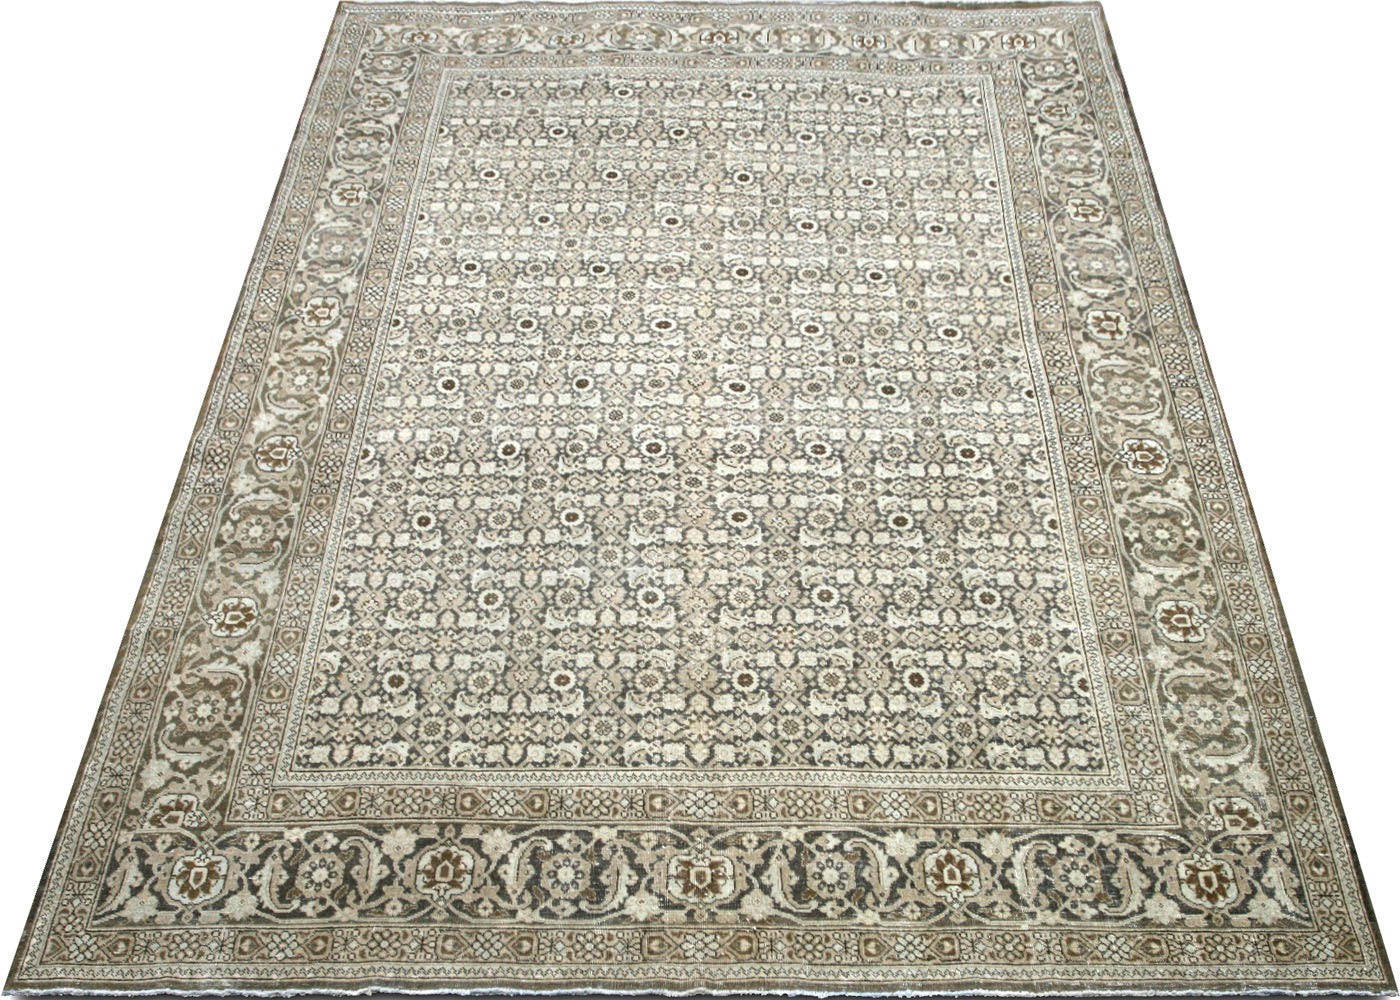 Semi Antique Persian Tabriz Rug - 7'8" x 10'10"